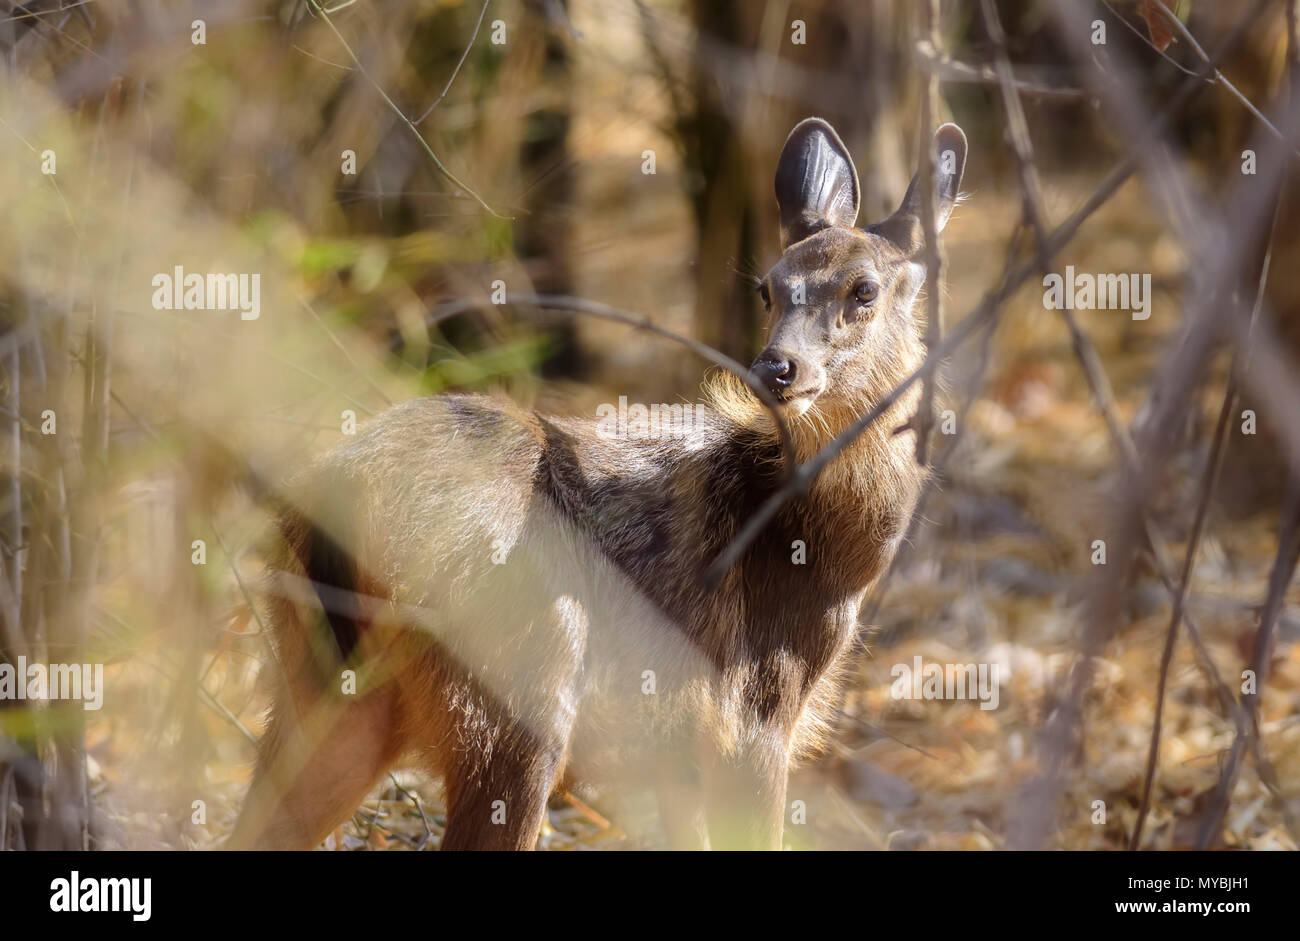 A Sambar Deer peeking through bush inside Tadoba Reserve Forest of India, copy space Stock Photo